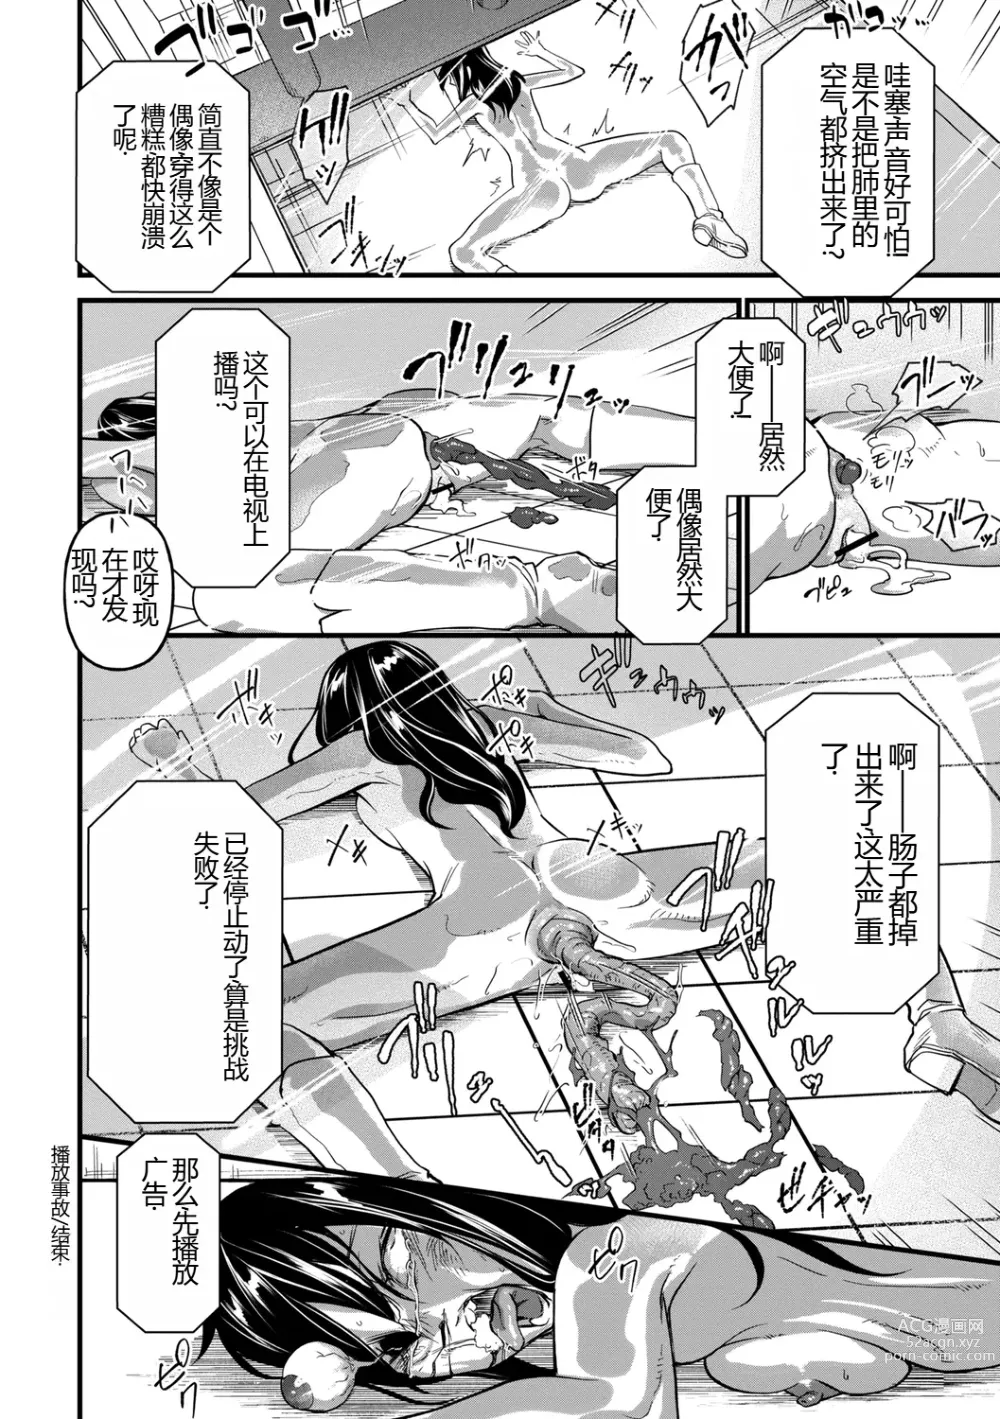 Page 208 of manga Nikugyaku Egoism